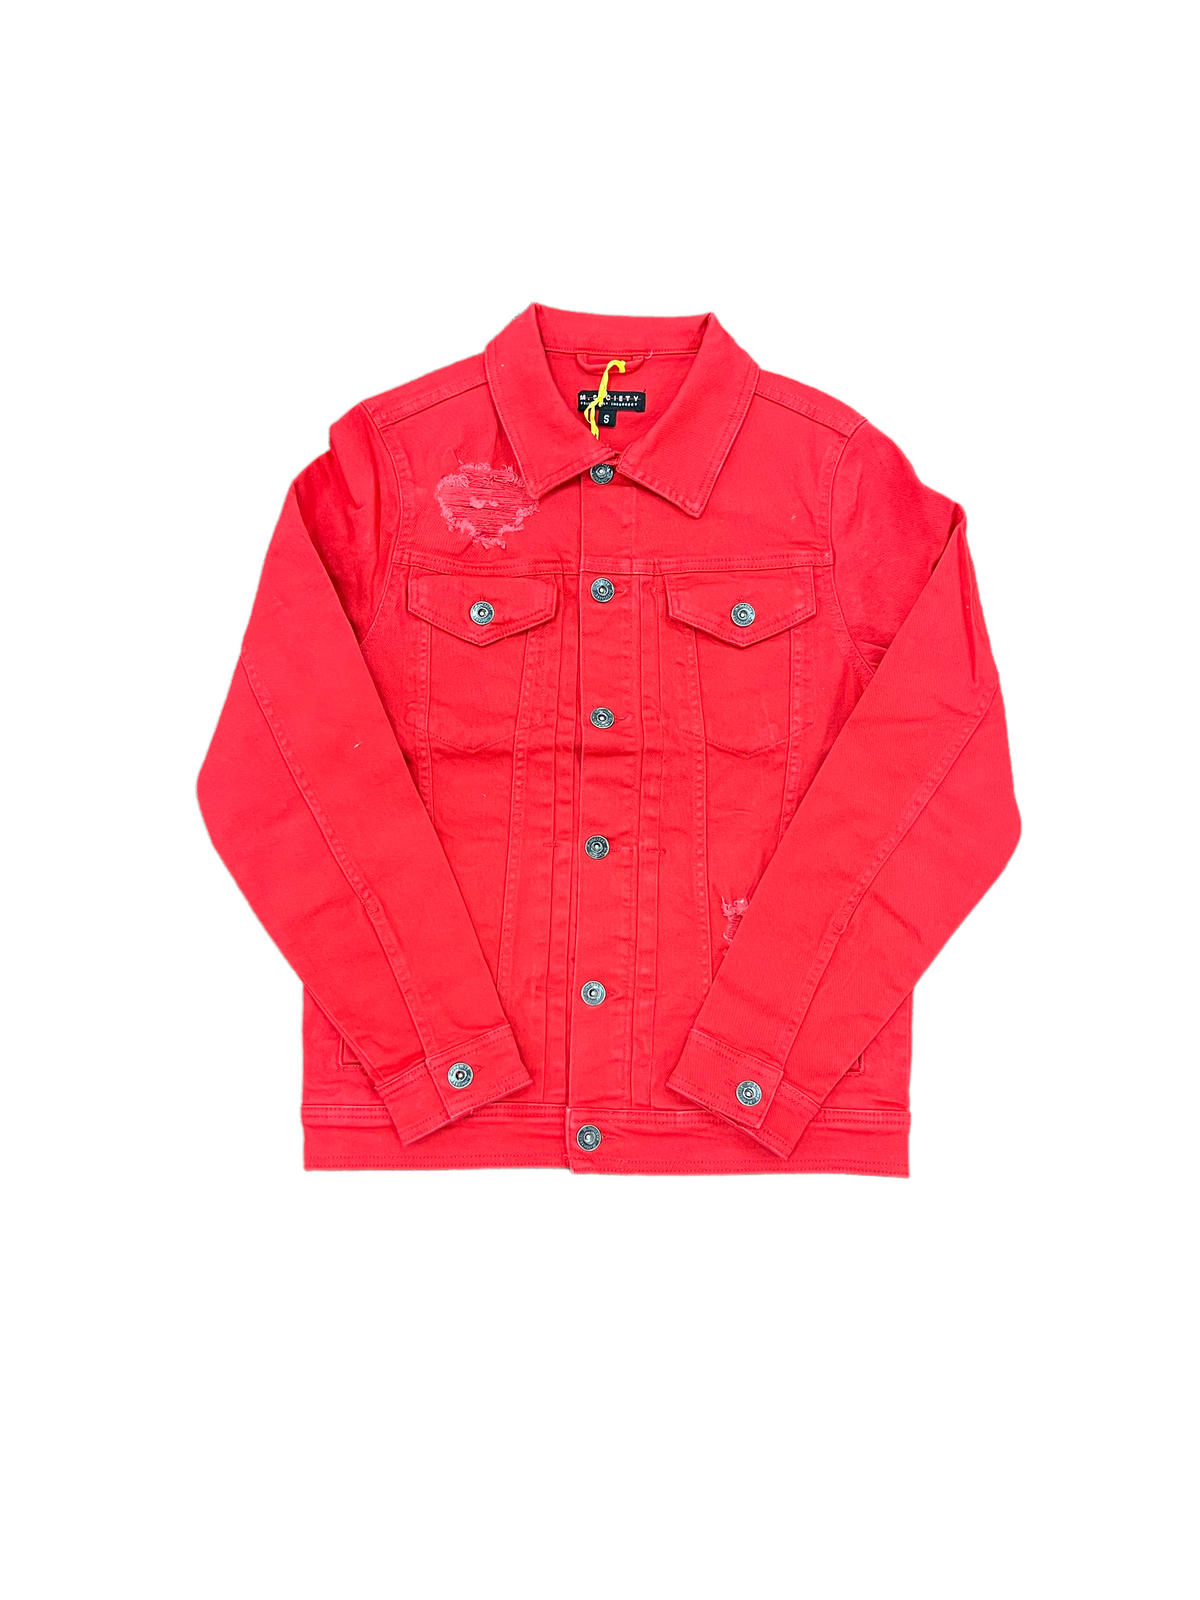 Red twill Jean jacket